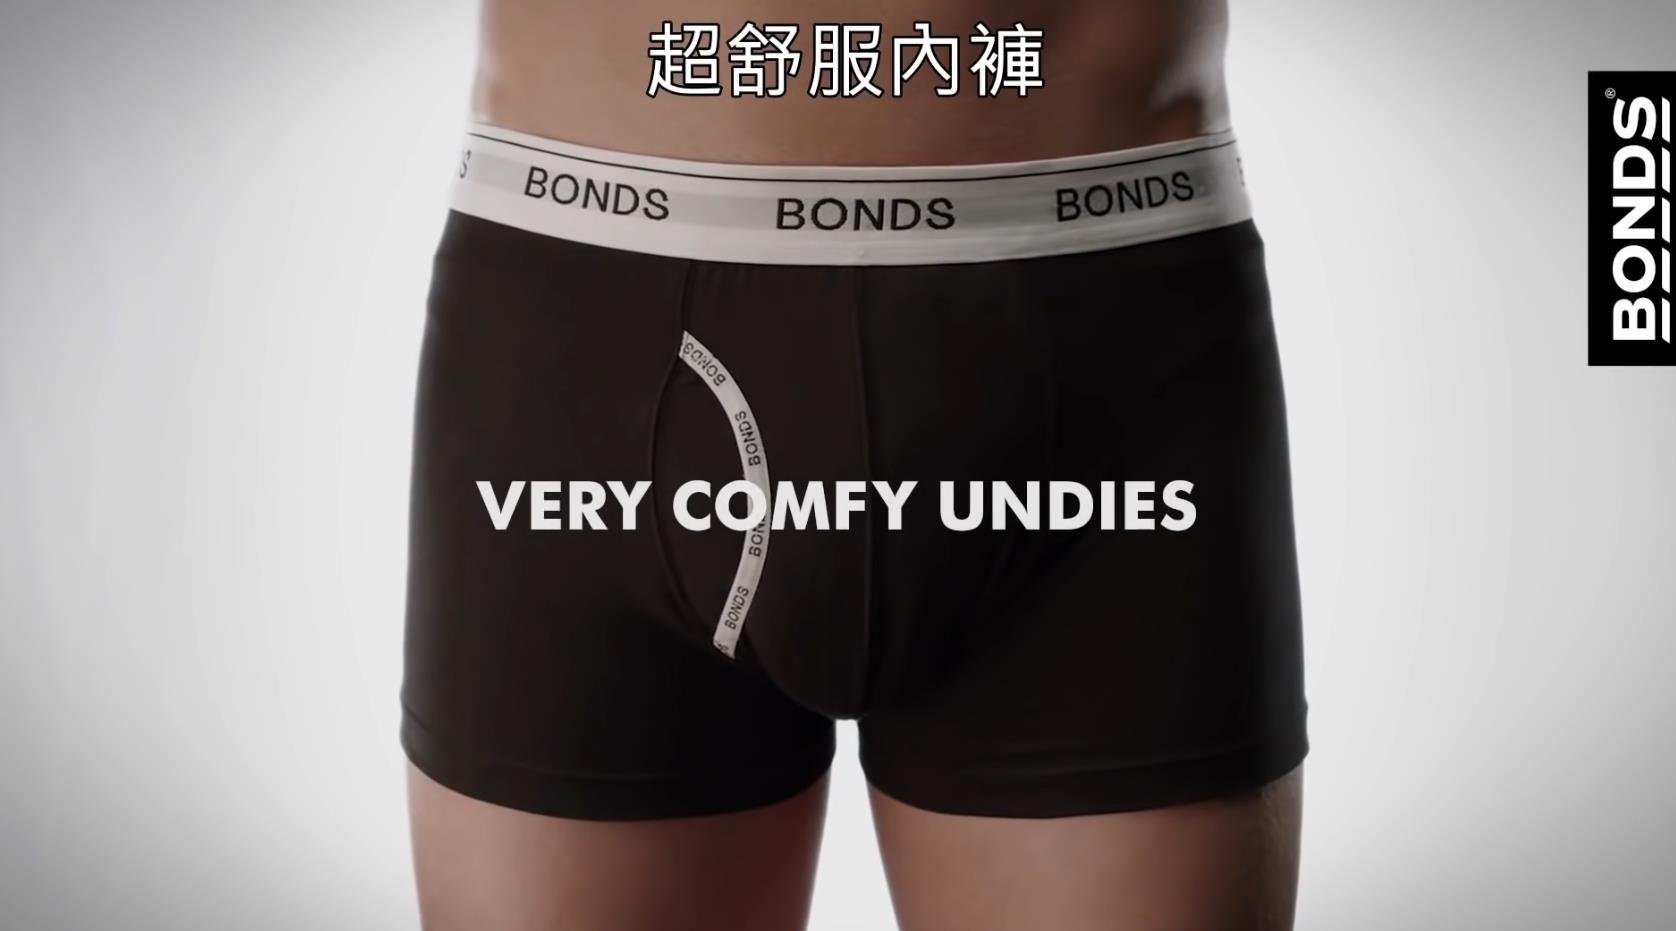 BONDS内裤广告好笑广告35.mp4